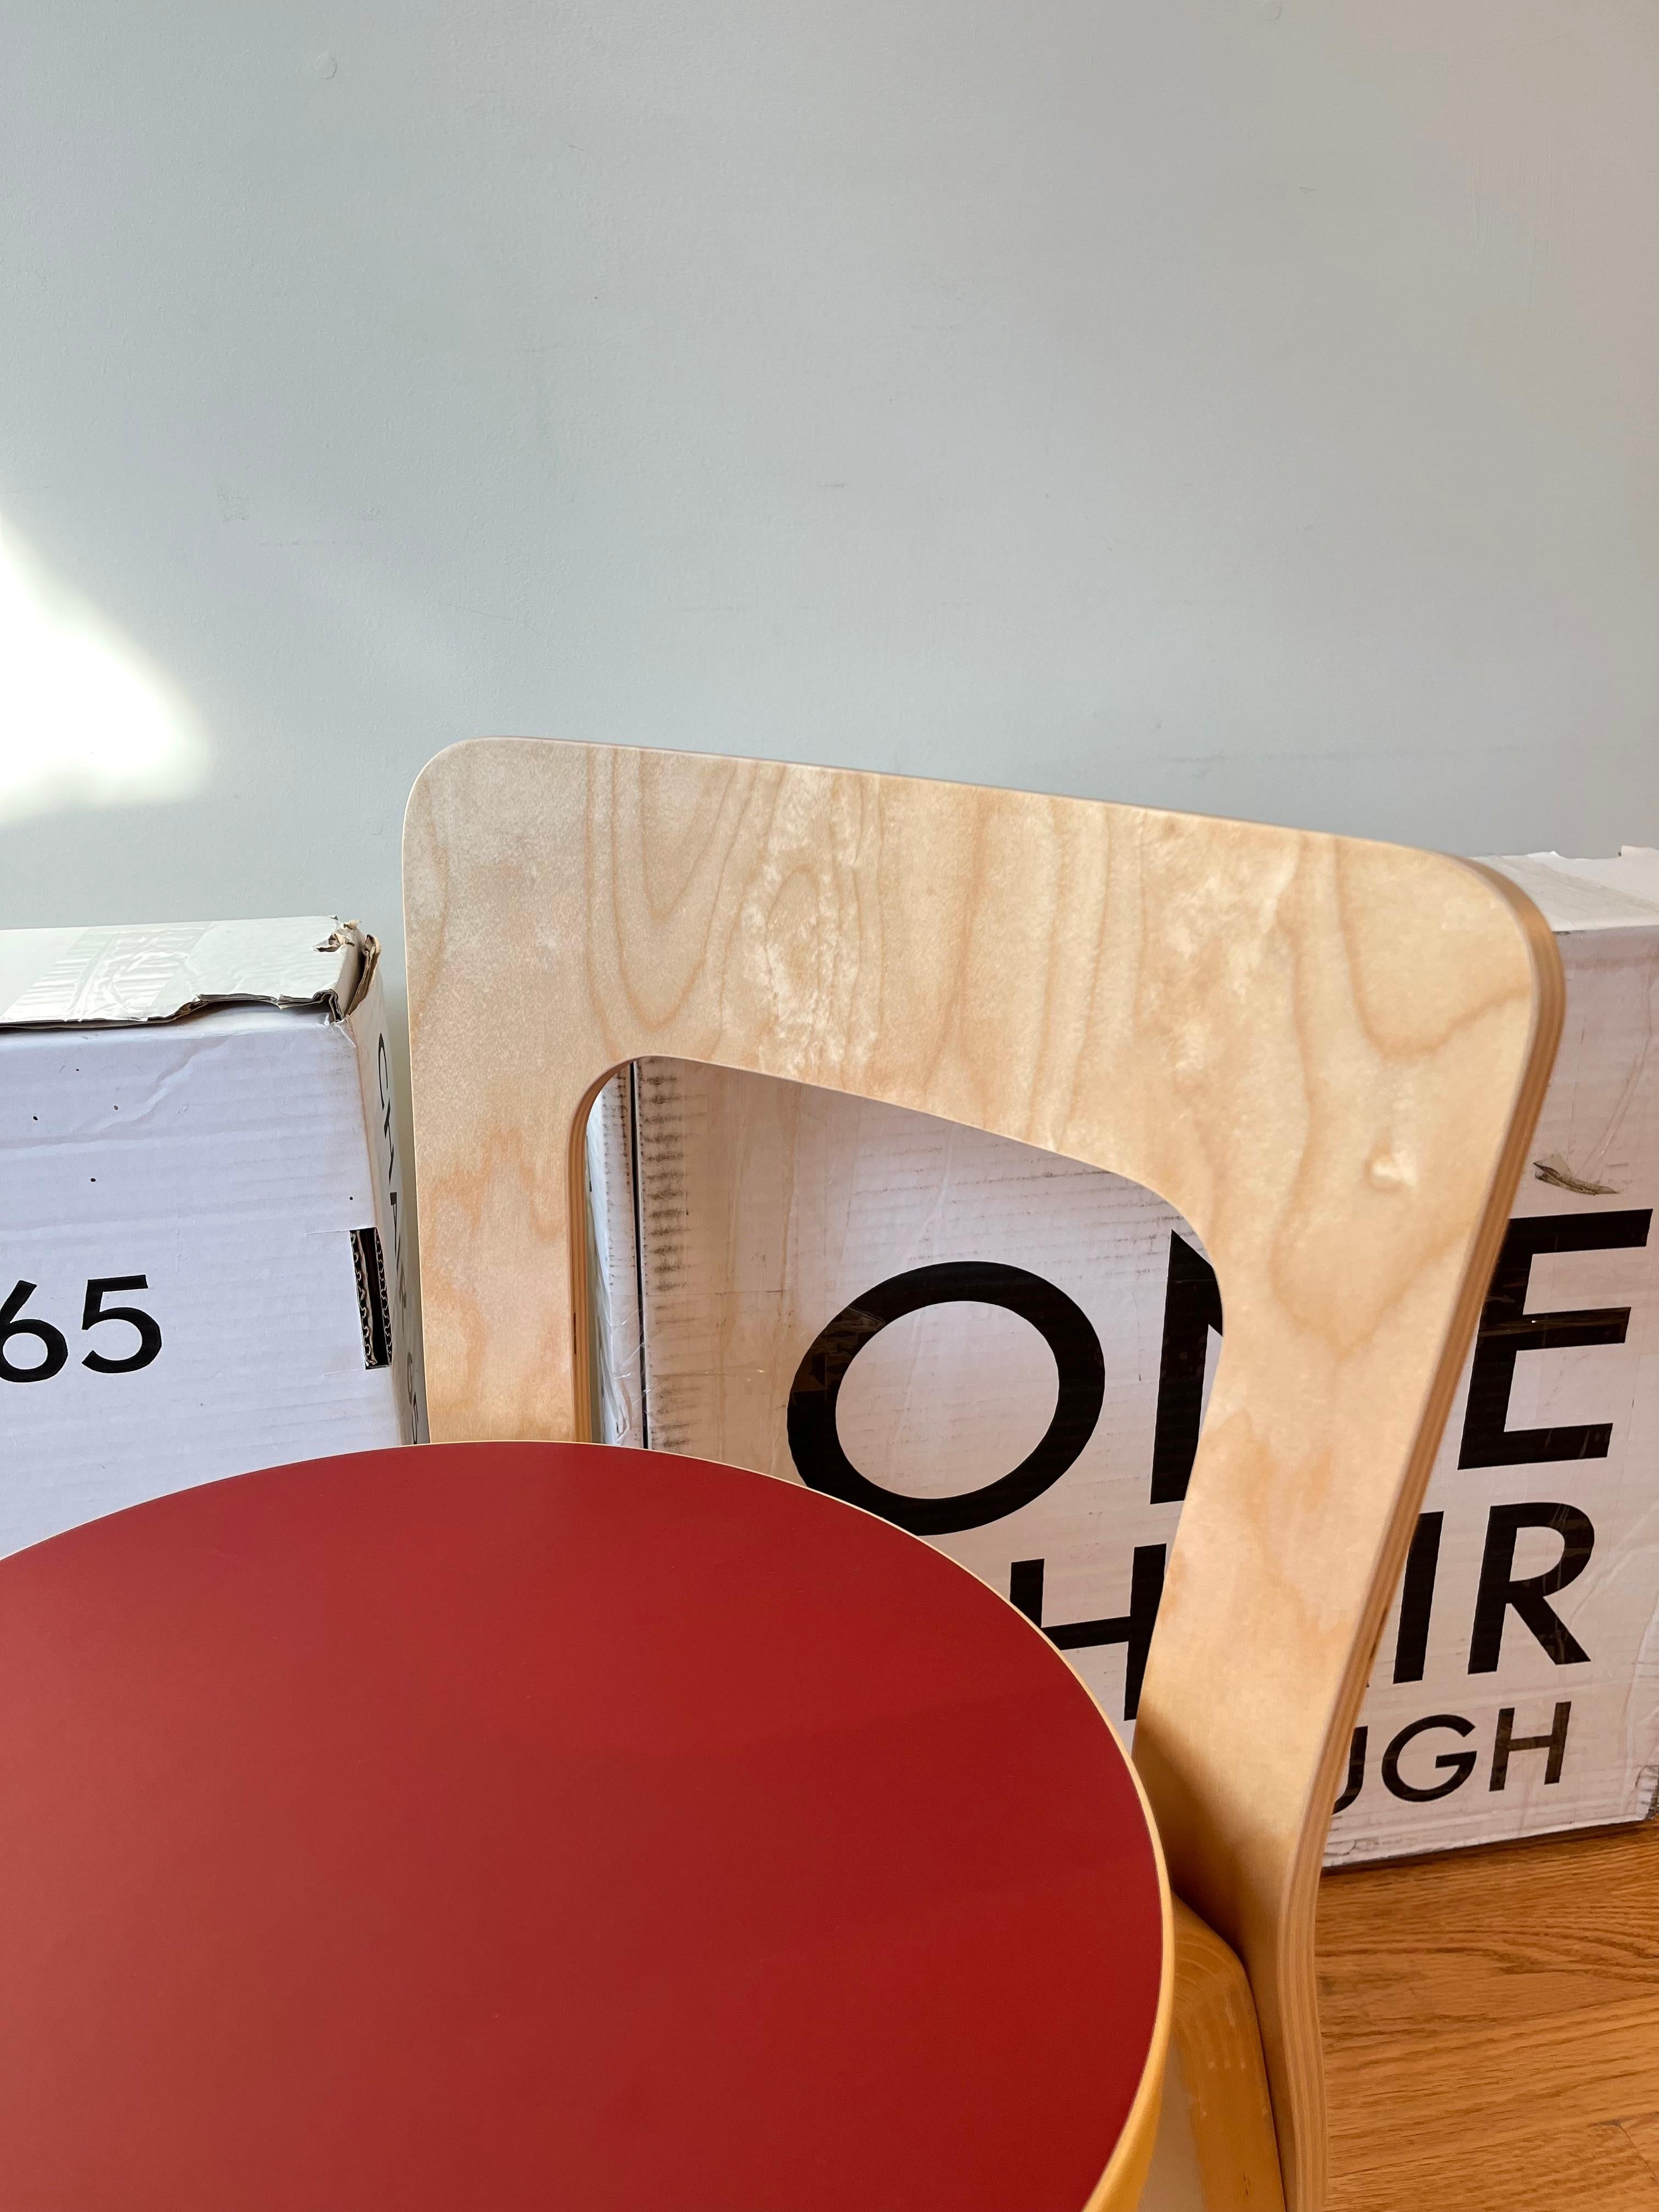 Bentwood (New Old Stock) Chair N65 by Alvar Aalto for Artek (Red Linoleum)